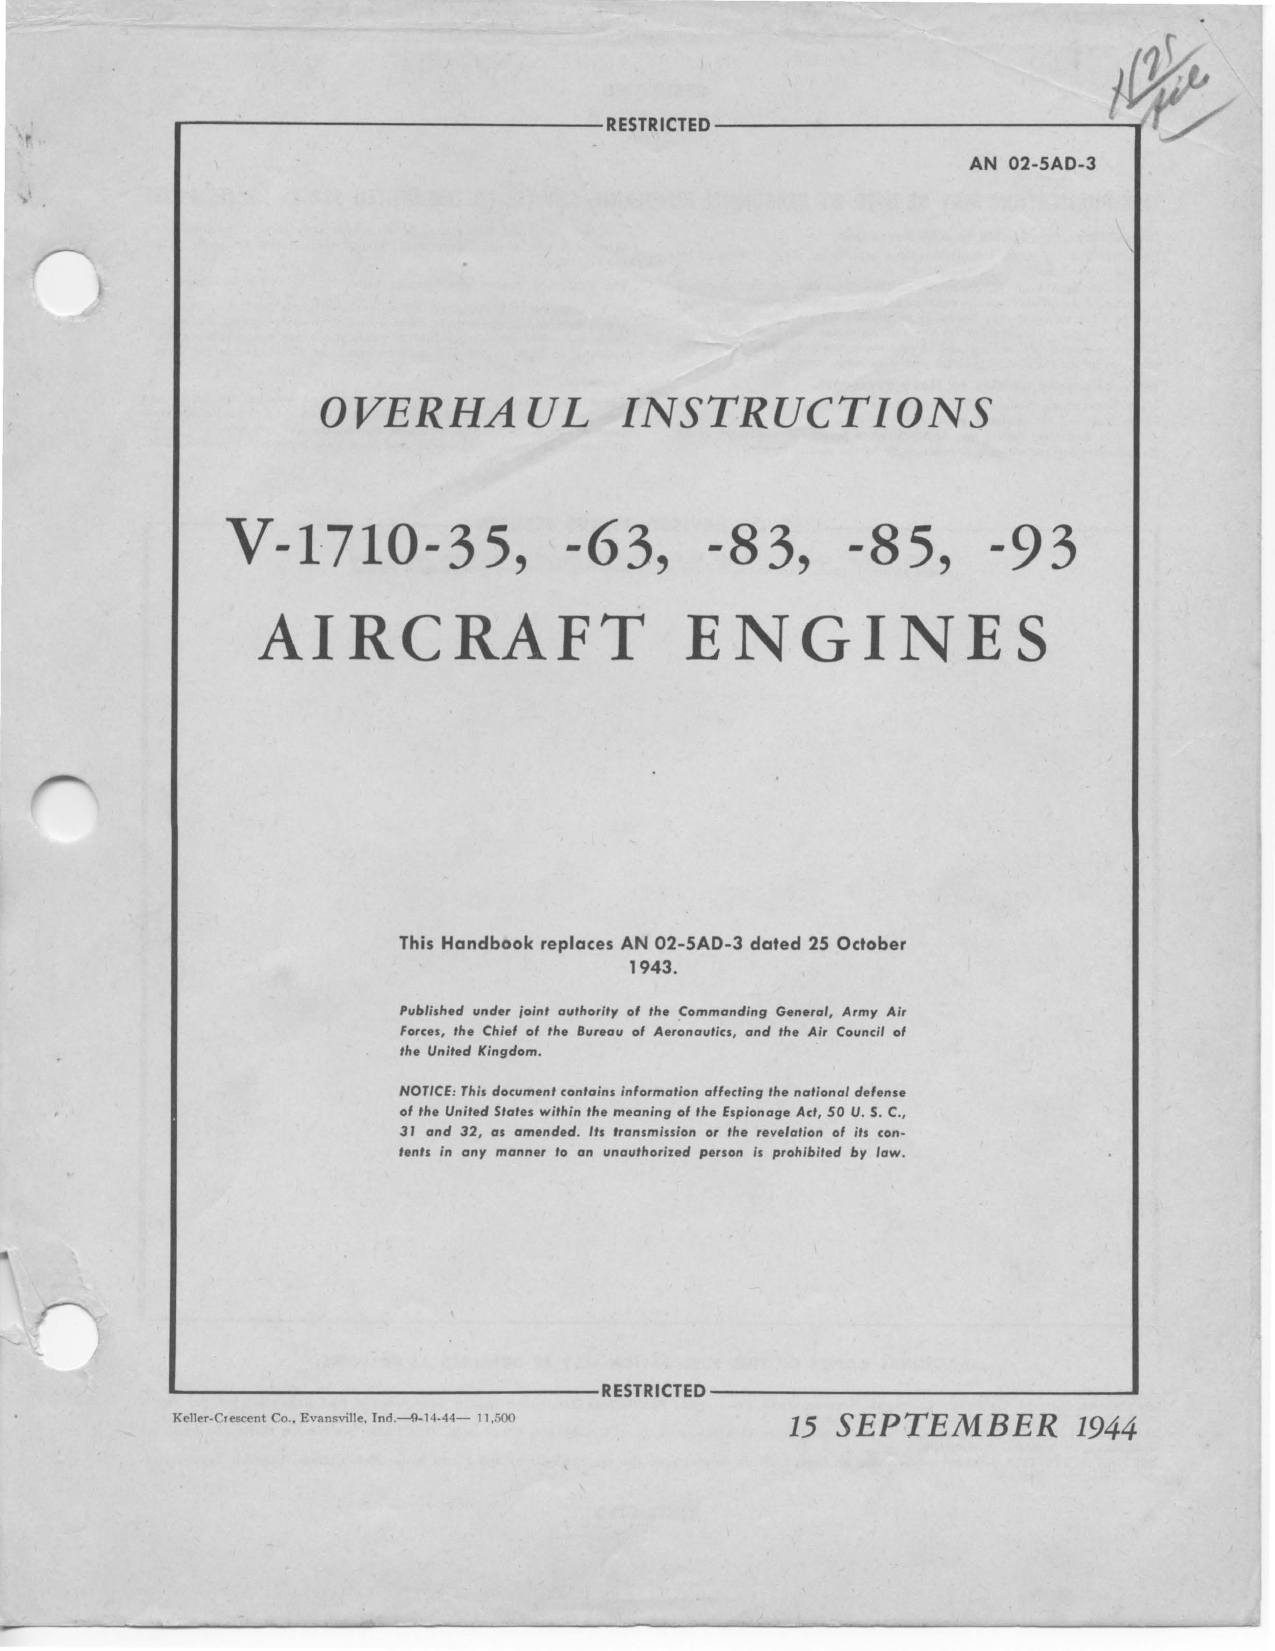 Sample page 1 from AirCorps Library document: Overhaul Instructions for V-1710-35, V-1710-63, V-1710-83, V-1710-85 and V-1710-93